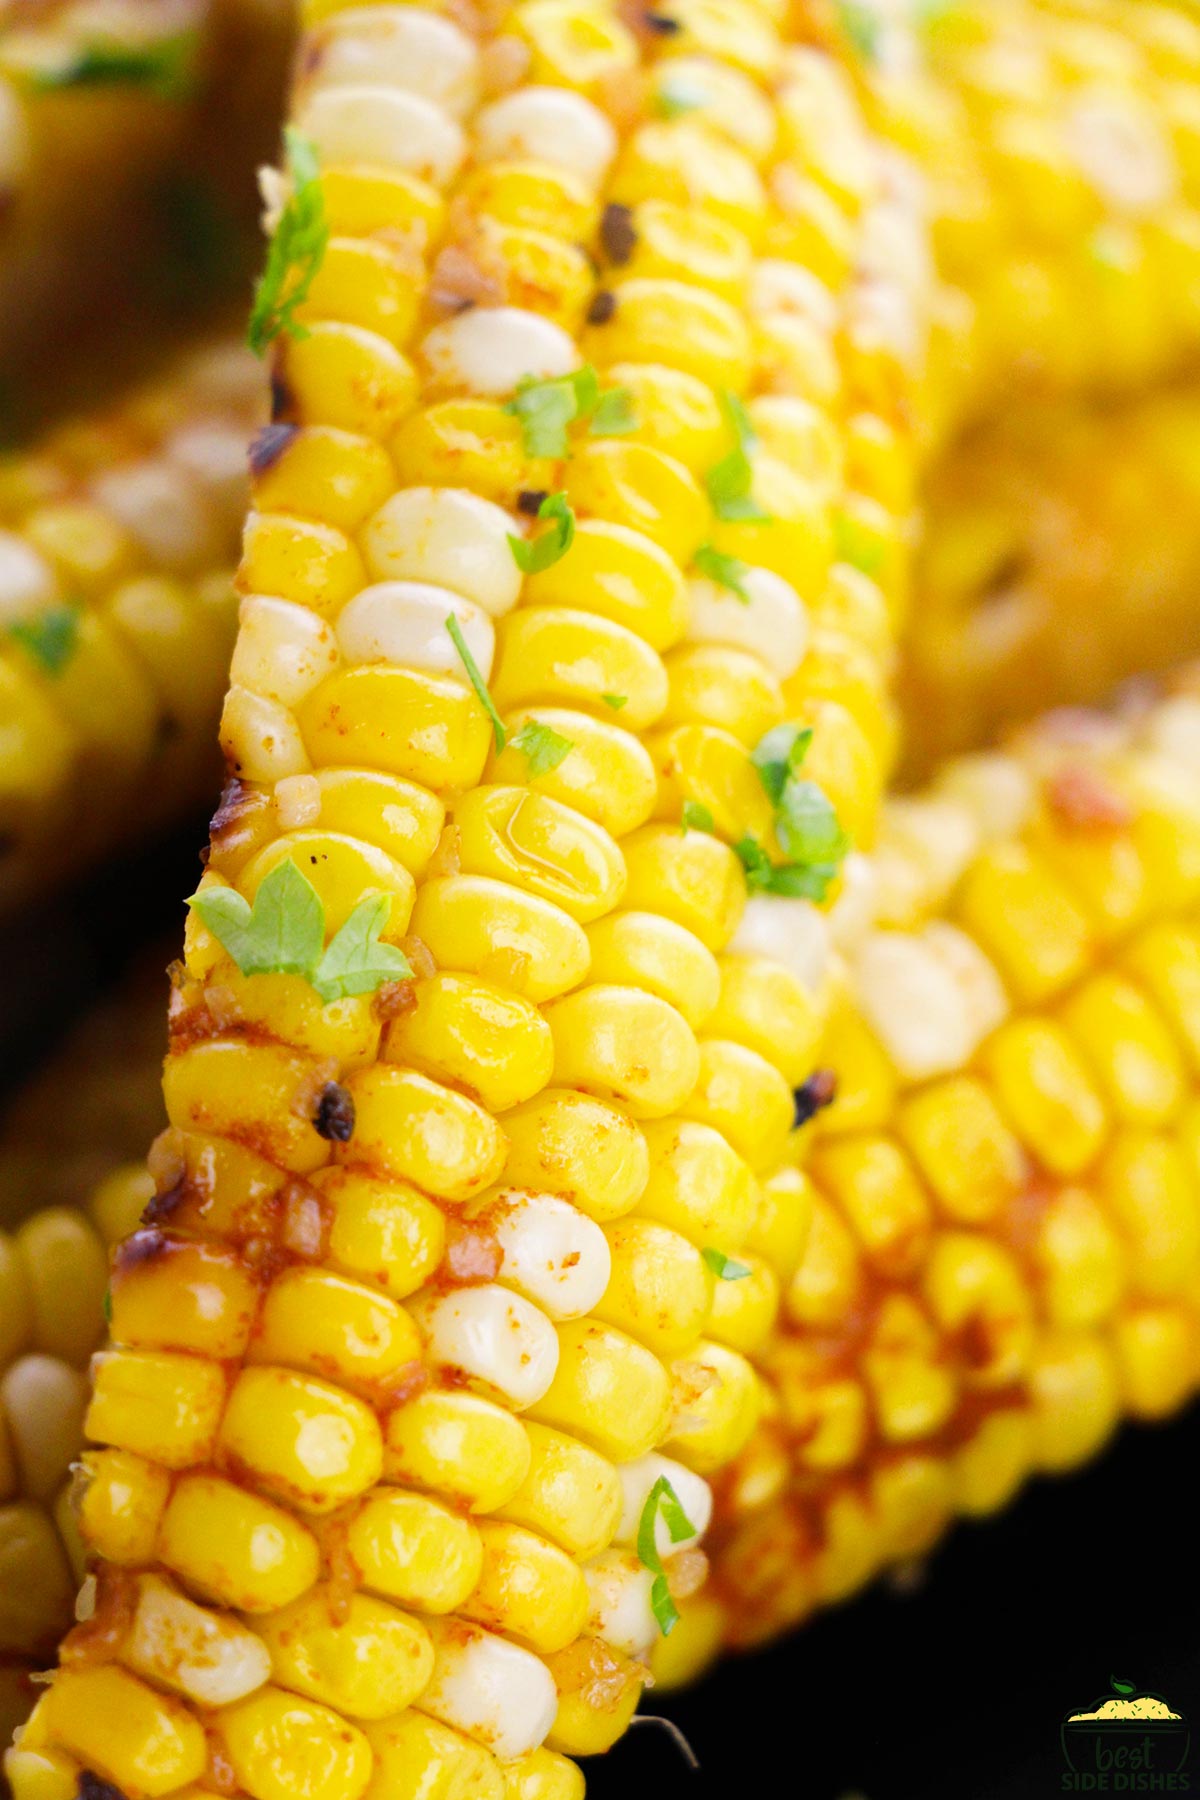 Up close corn ribs